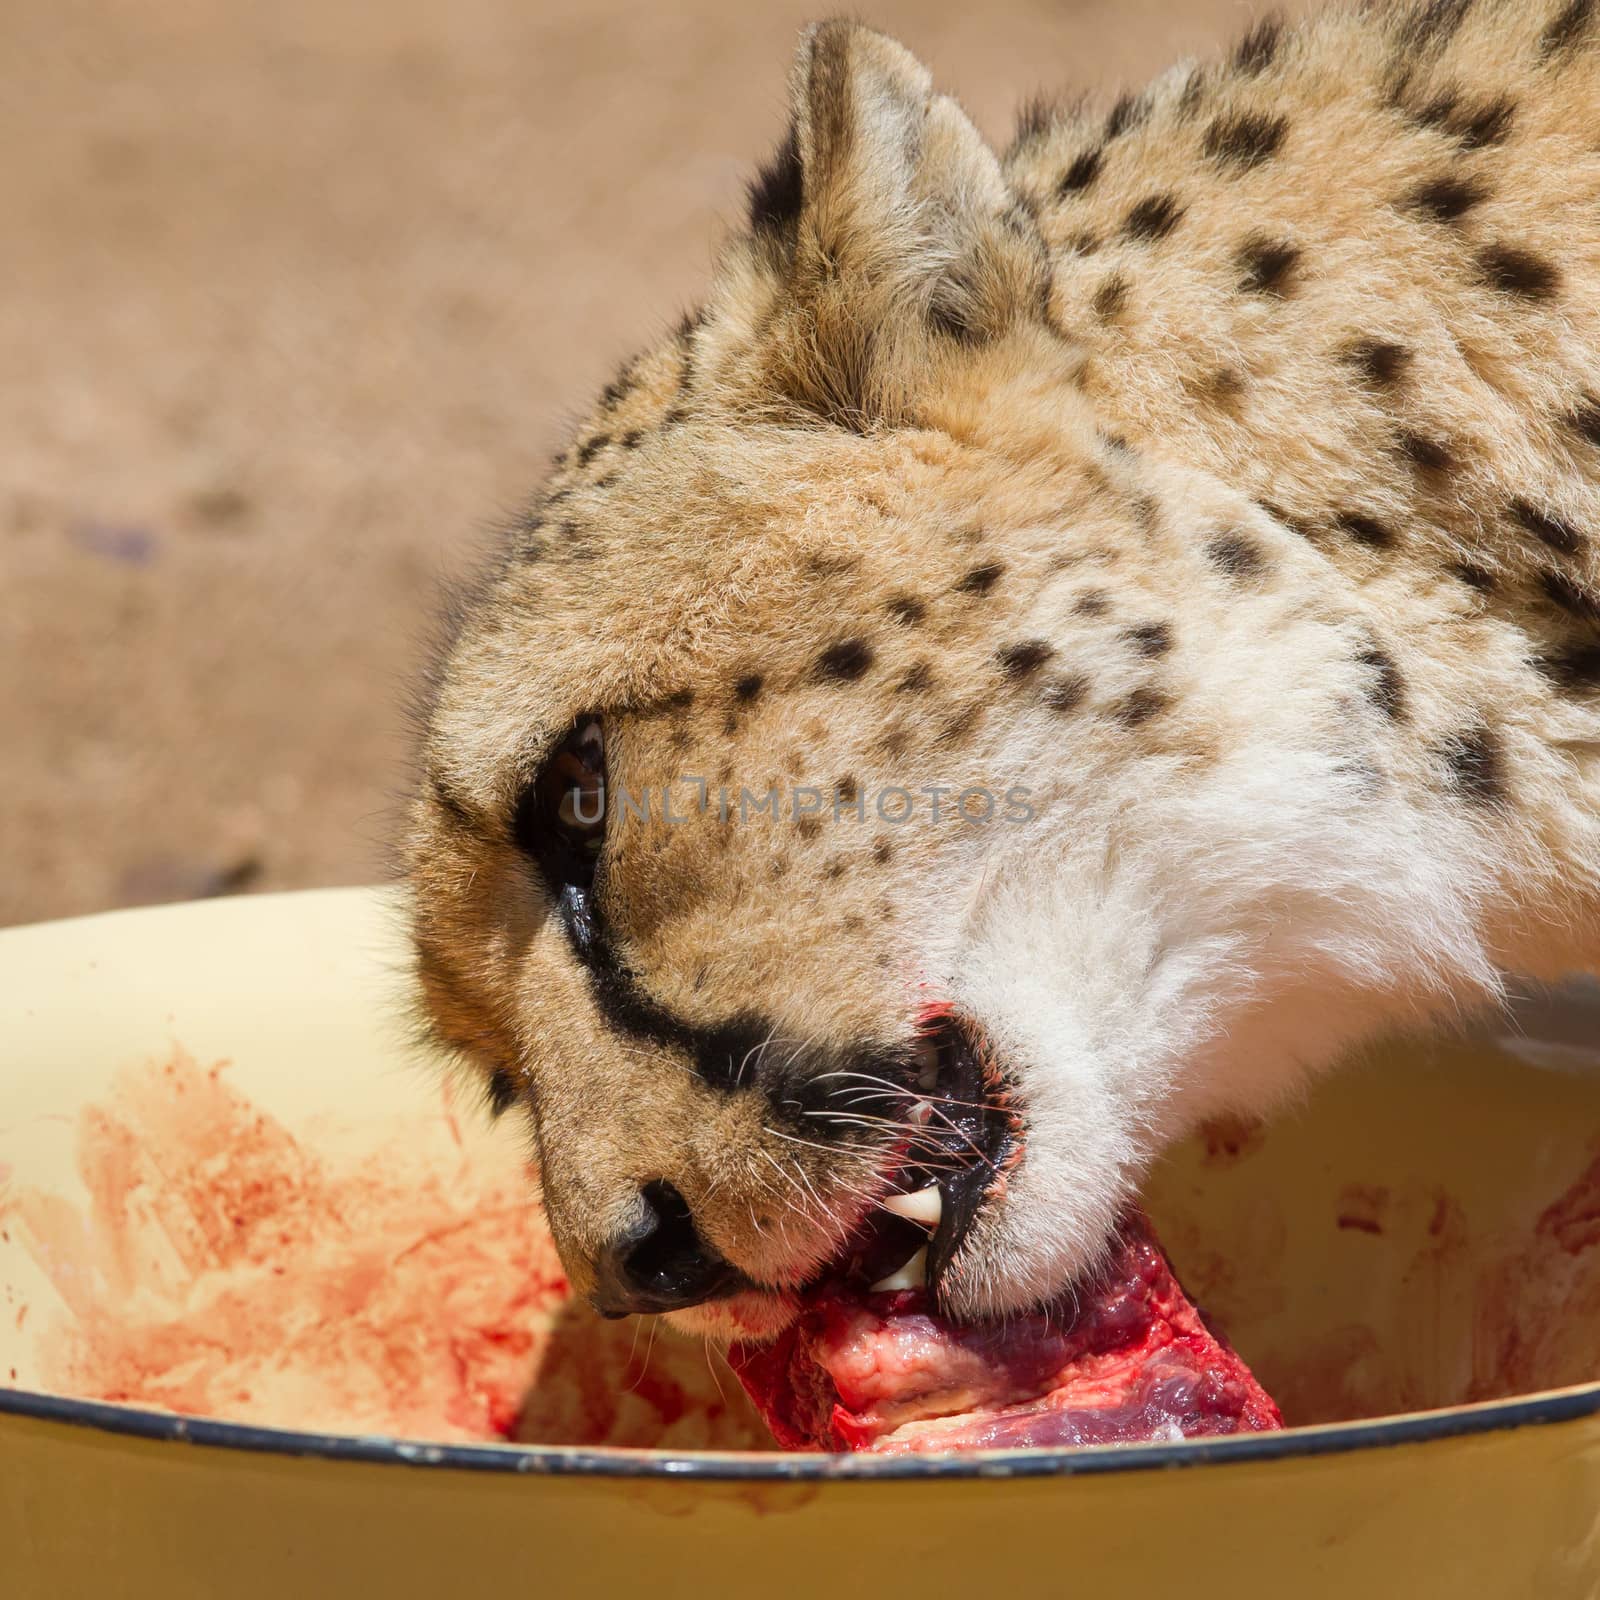 Cheetah in captivity by michaklootwijk